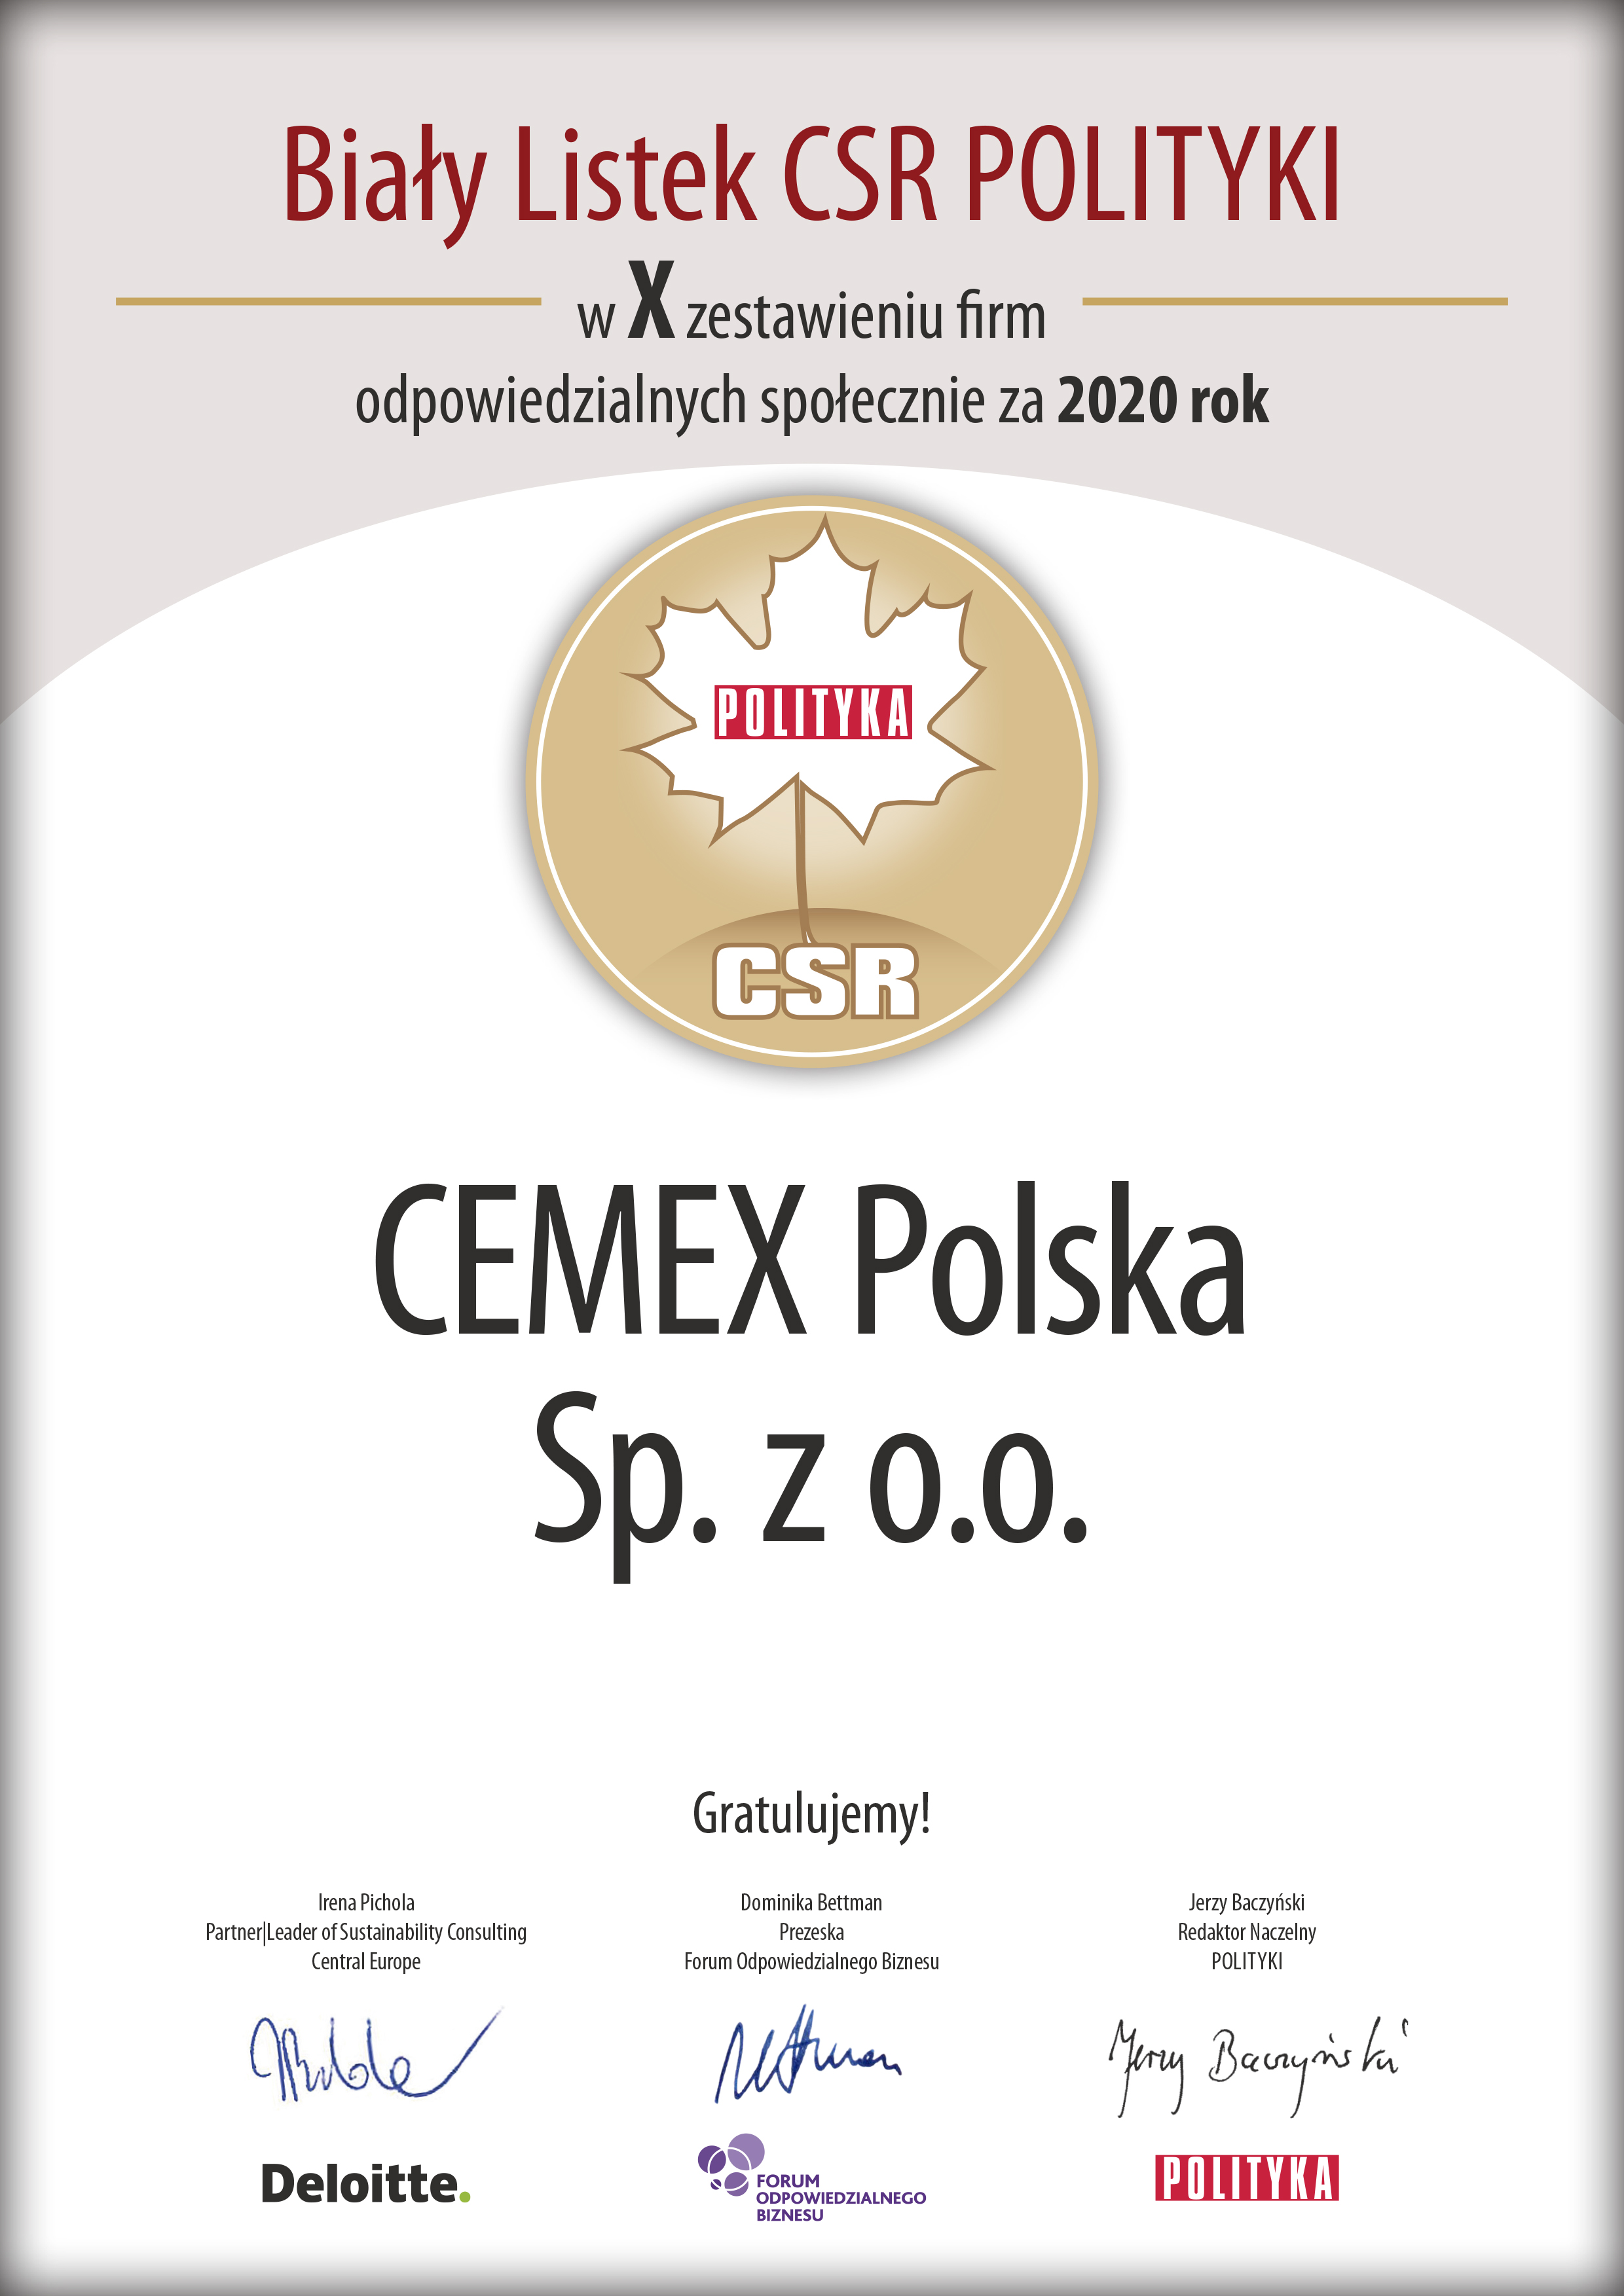 csr cemex, biały listek csr, cemex polska